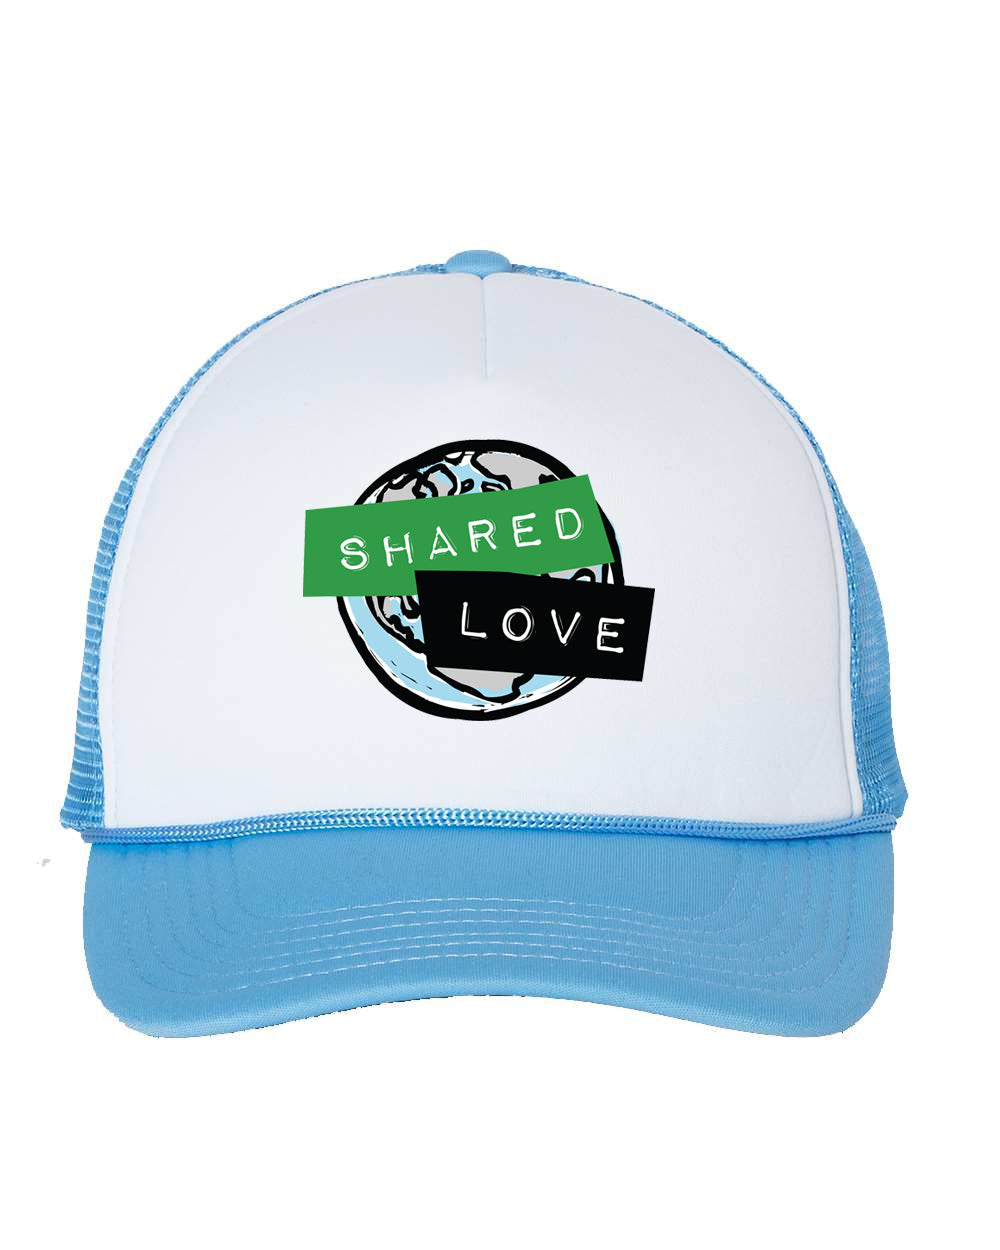 Shared Love Trucker Hat